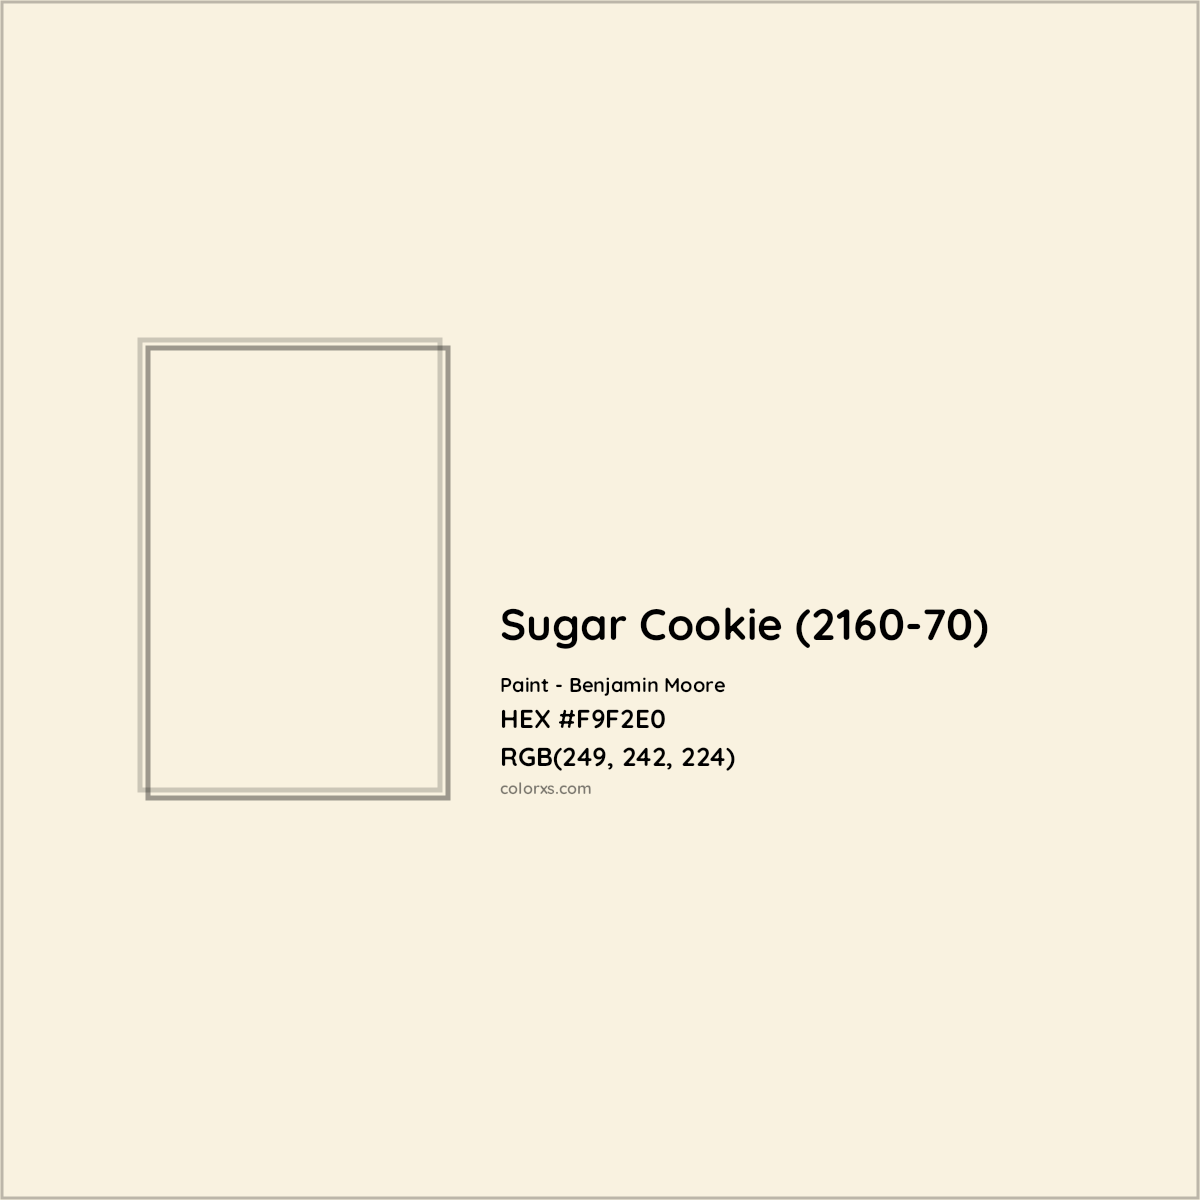 HEX #F9F2E0 Sugar Cookie (2160-70) Paint Benjamin Moore - Color Code